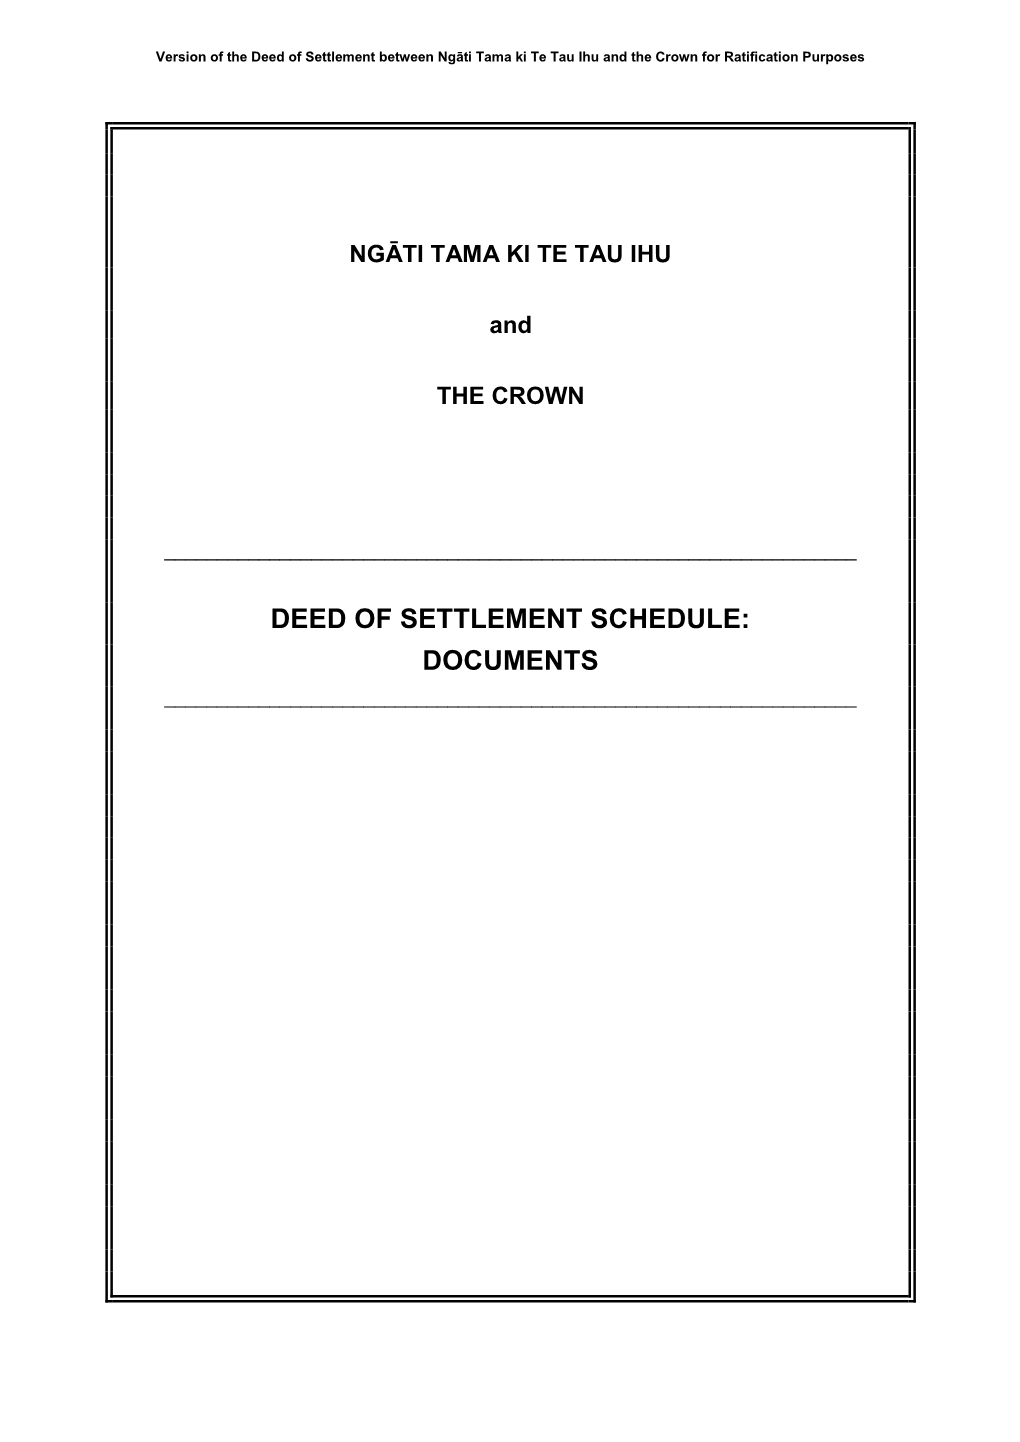 Deed of Settlement Schedule: Documents ______